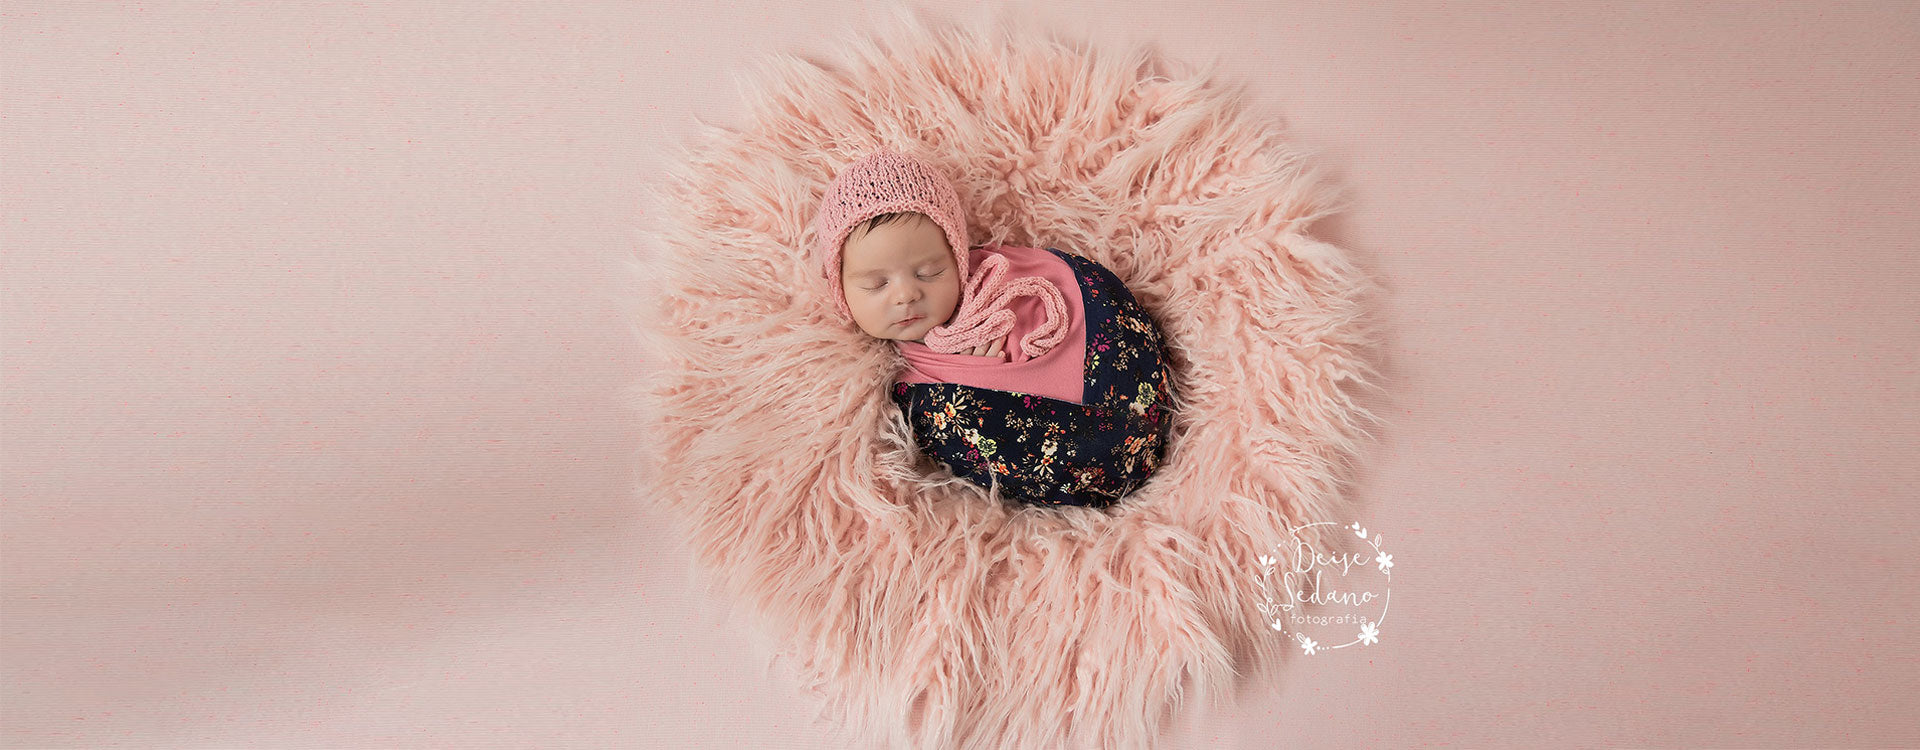 DonJudy New Heart Manta Bebé Recién Nacido Soft Faux Fur